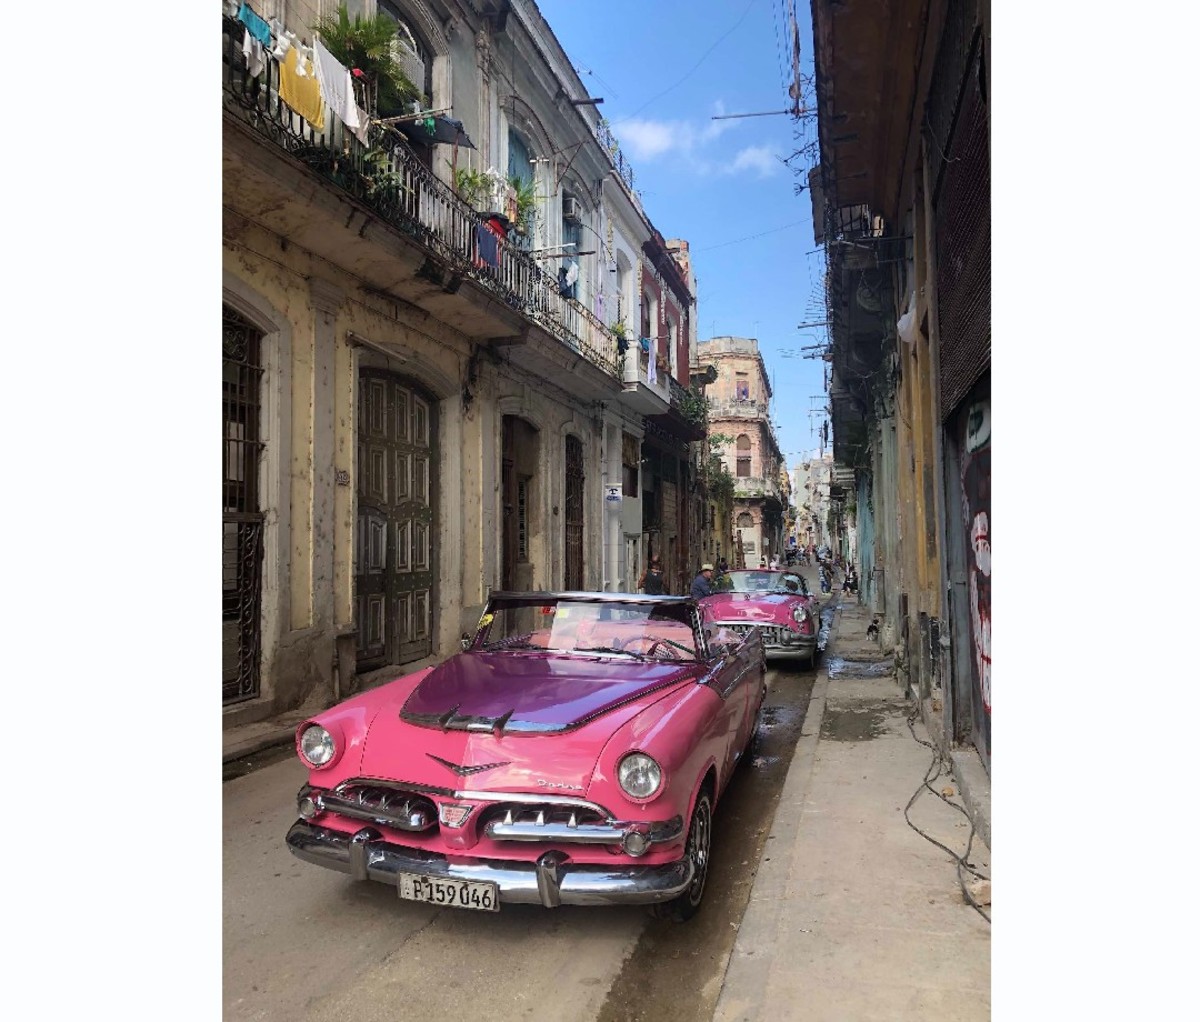 Pink classic car in Cuba streets